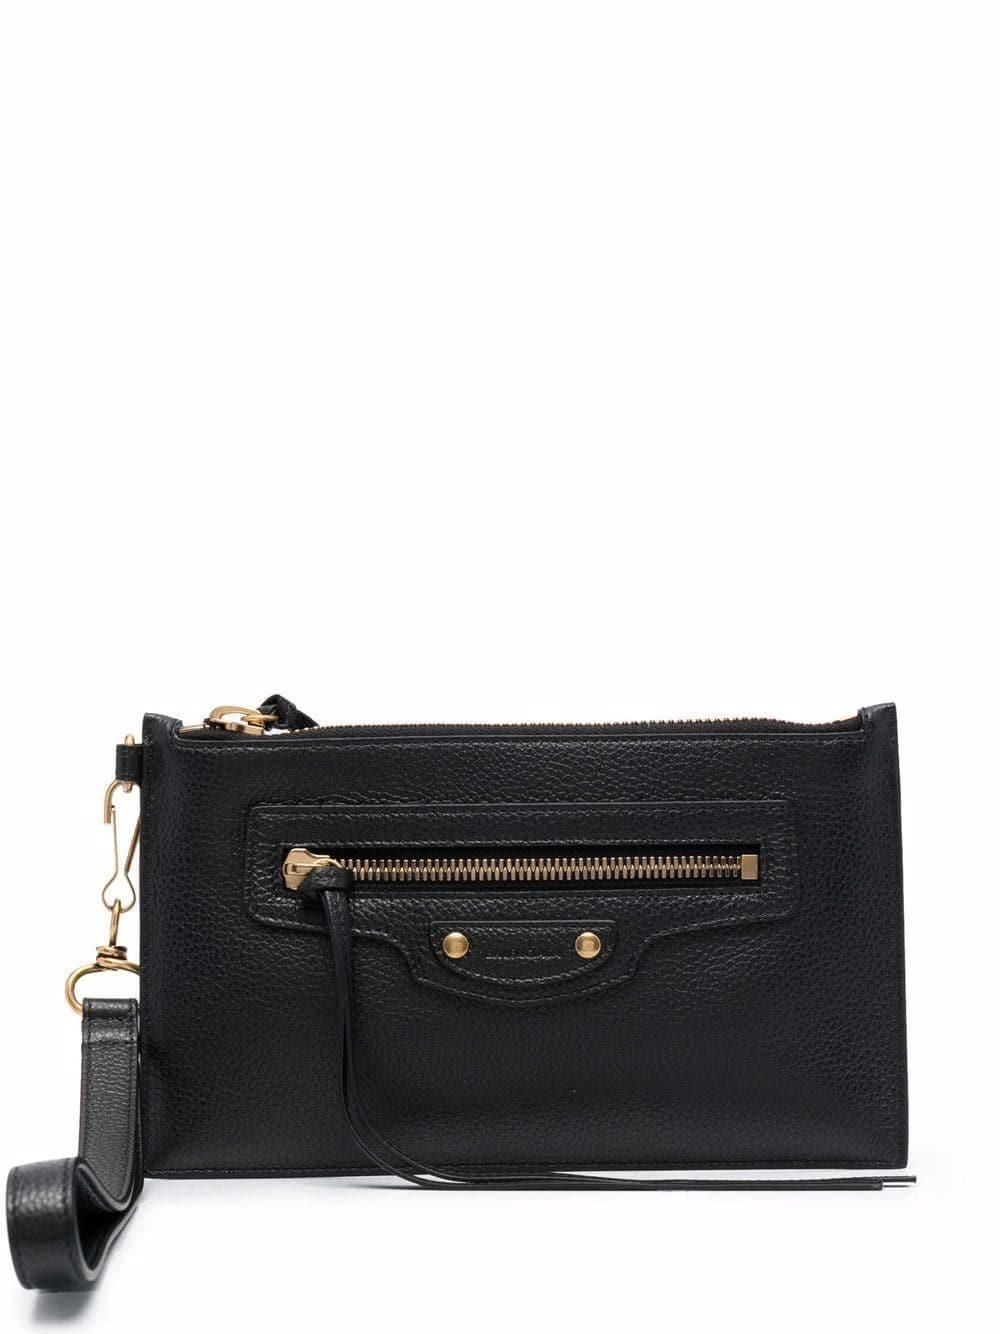 Balenciaga Leather Neo Classic Clutch Bag in Black | Lyst